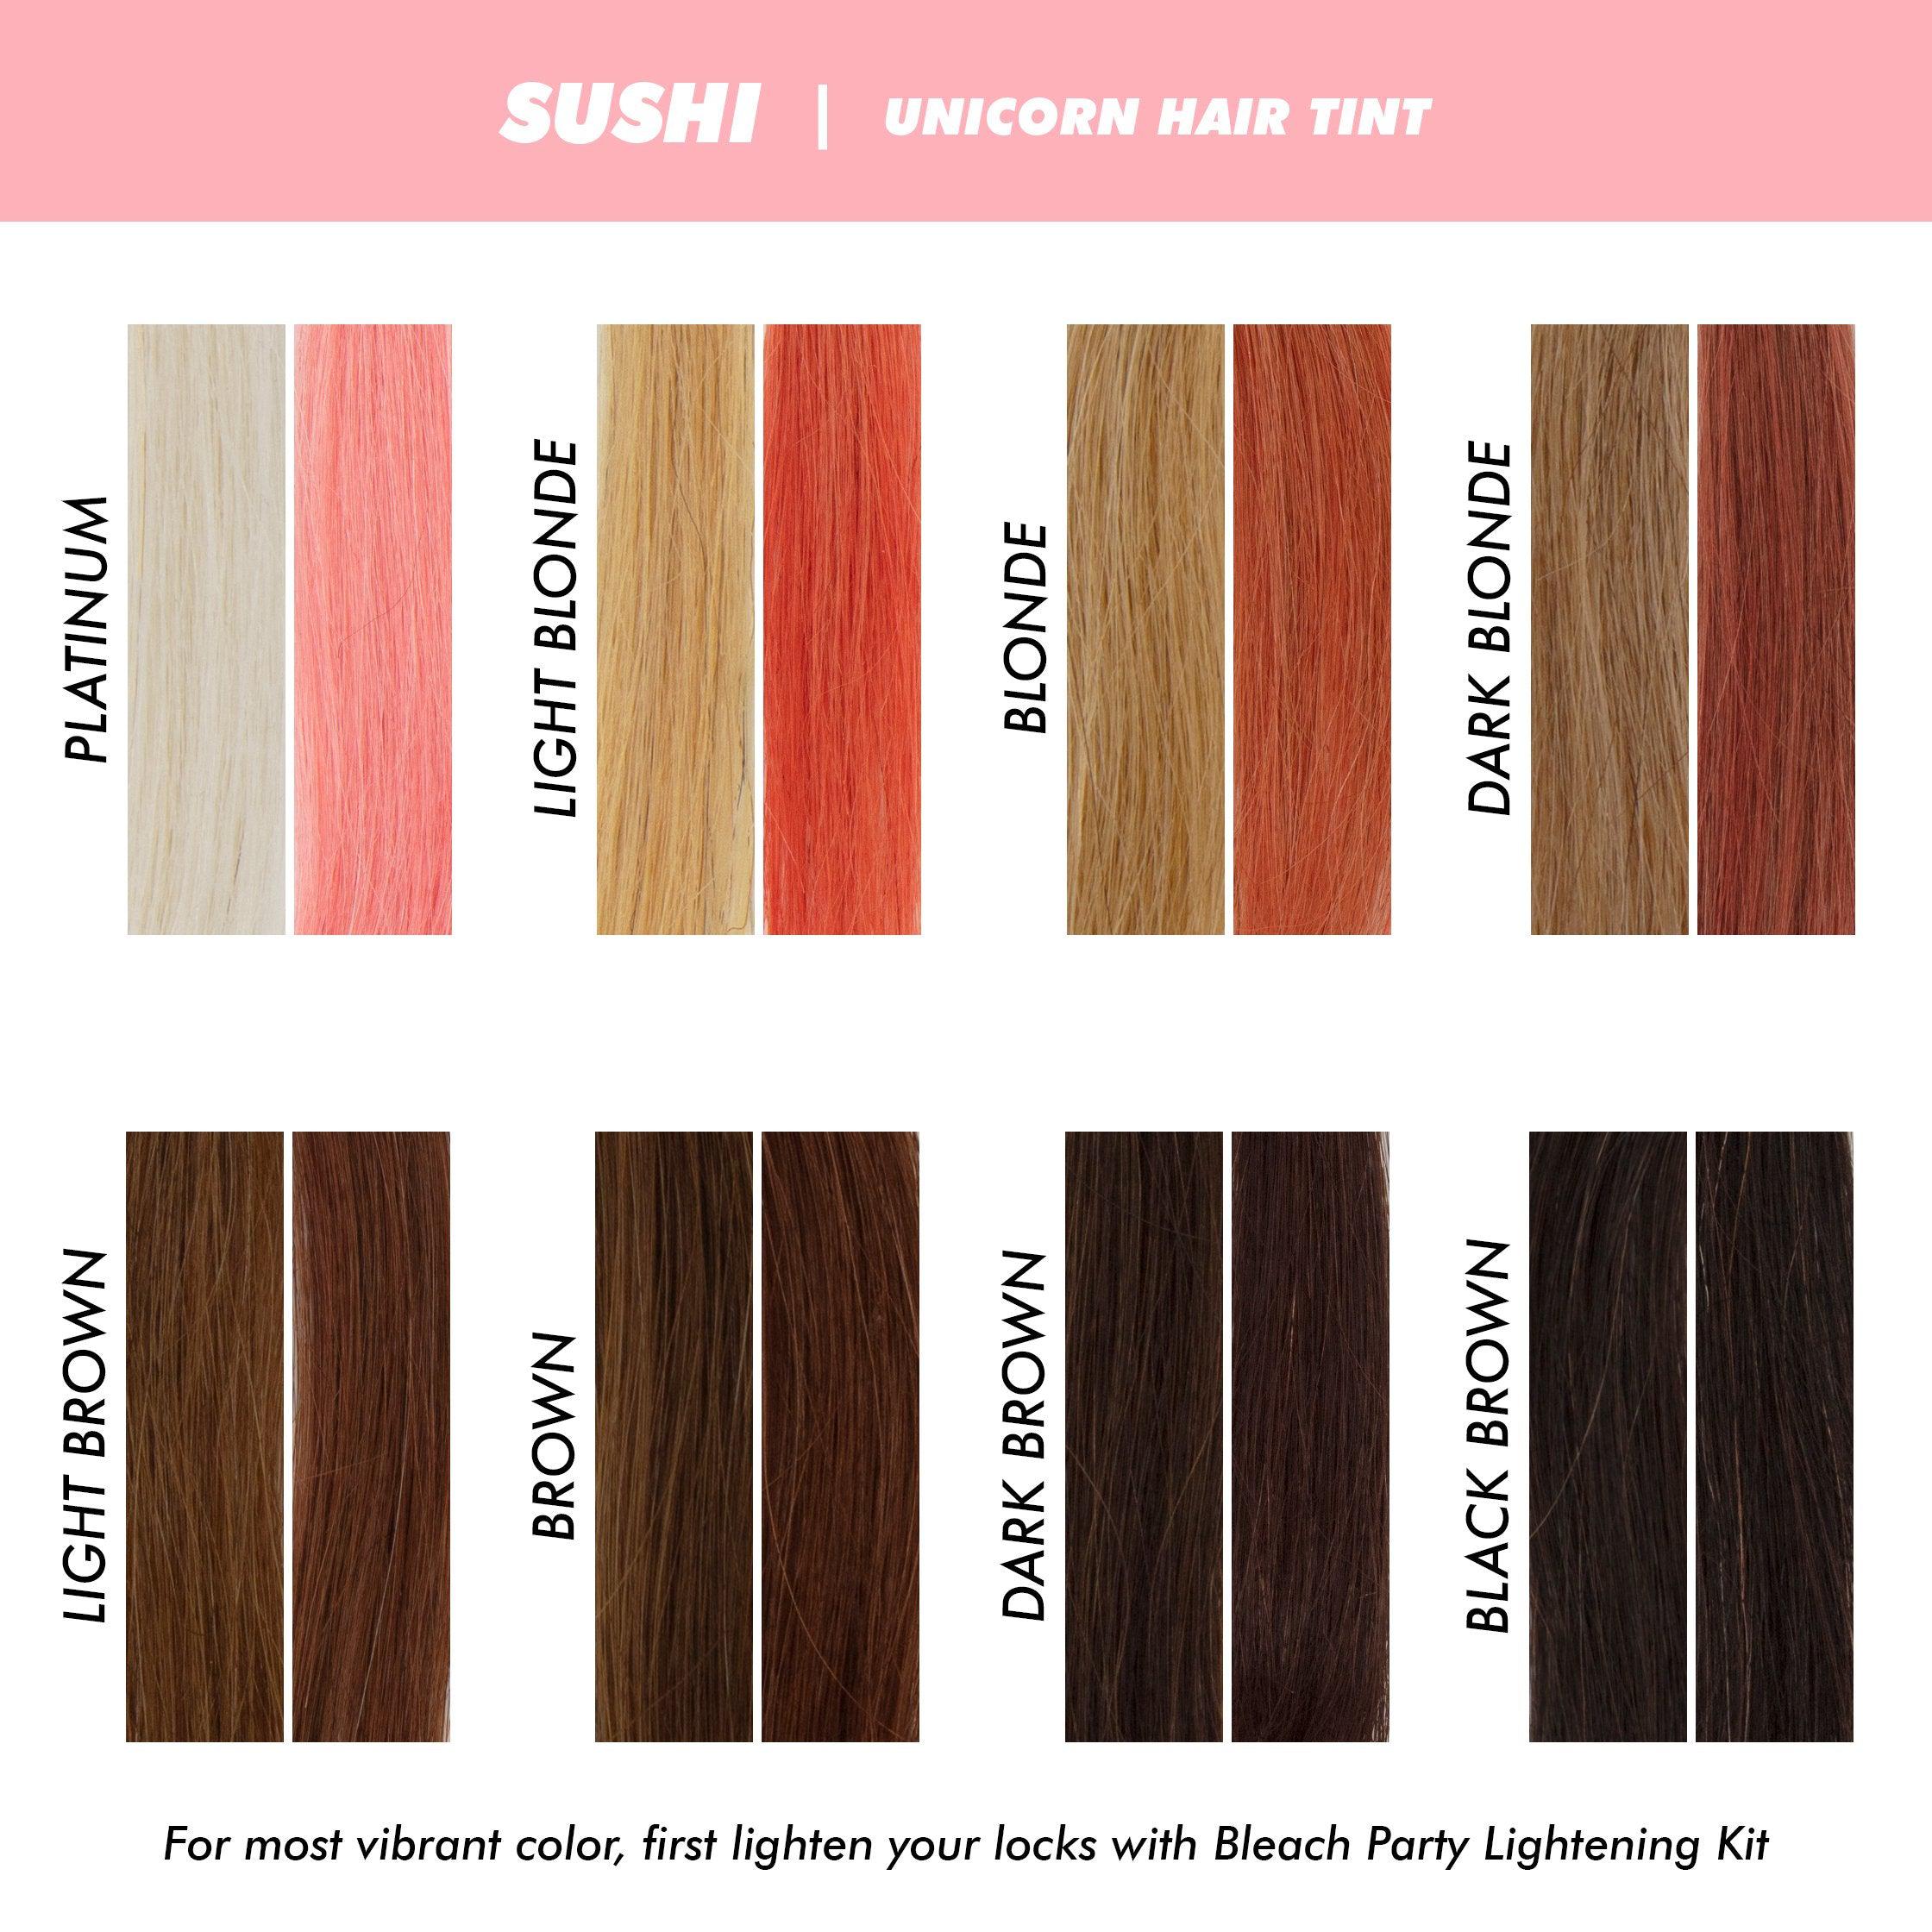 Unicorn Hair Tints variant:Sushi